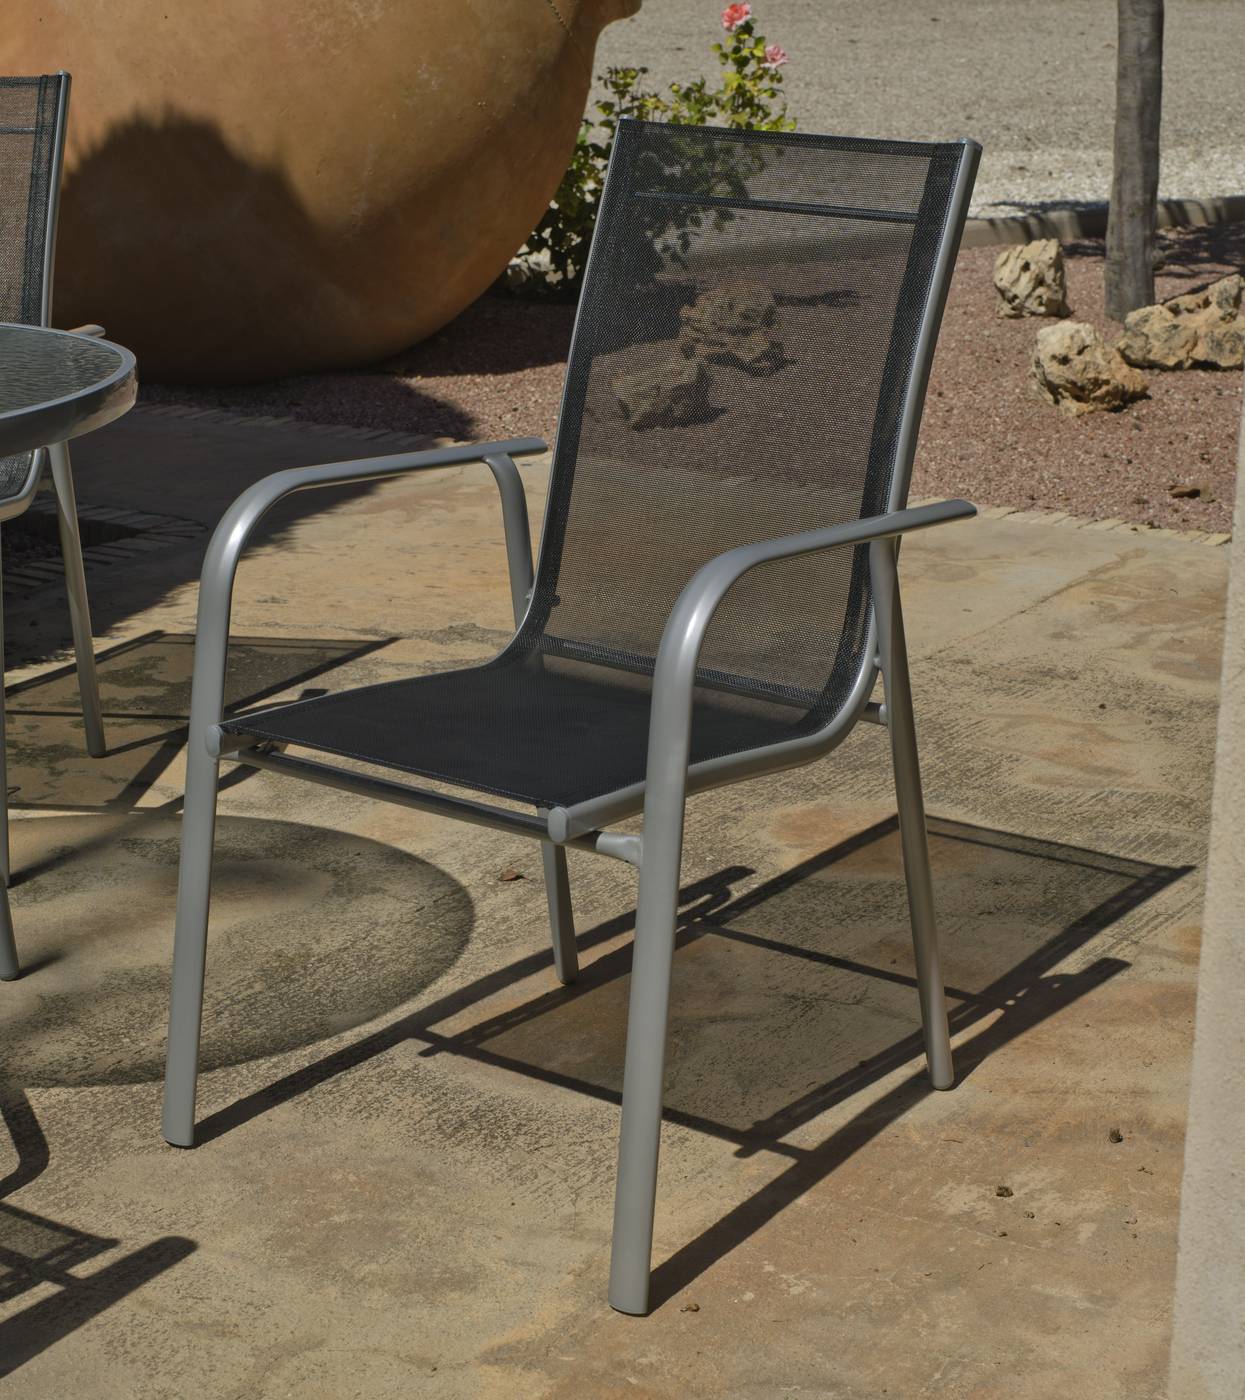 Conjunto Aluminio Nora 150-4 - Conjunto de aluminio color plata: mesa ovalada con tablero cristal templado + 4 sillones de aluminio y textilen